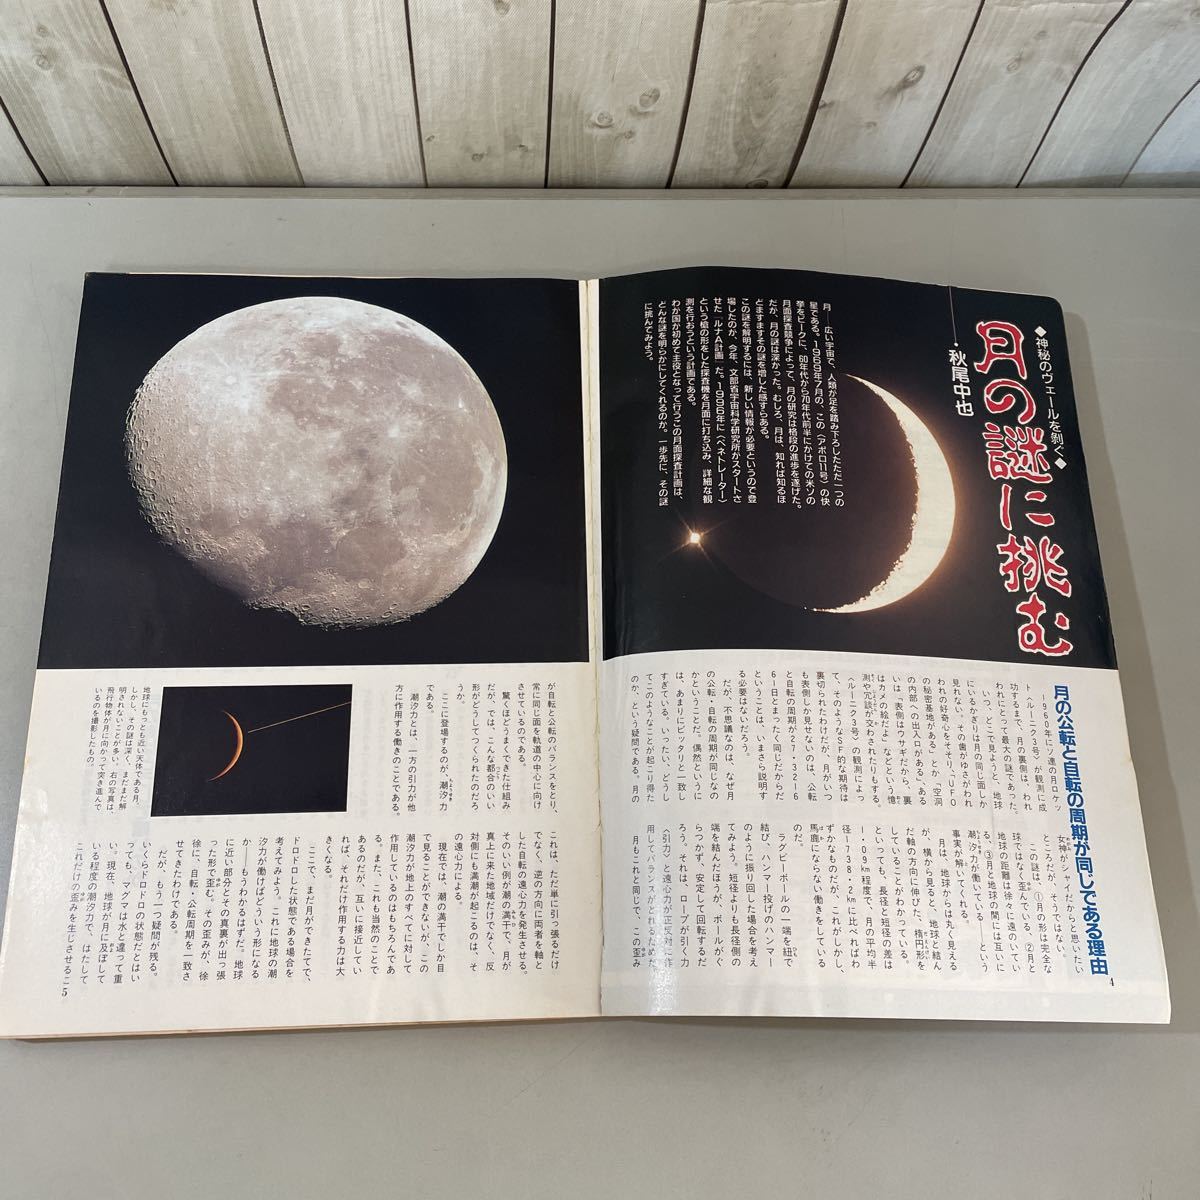 * rare * super science magazine wonder life no. 20 number Shogakukan Inc. special 1991 year 11 month number /1992-1999 large .. calendar / red ..*2752